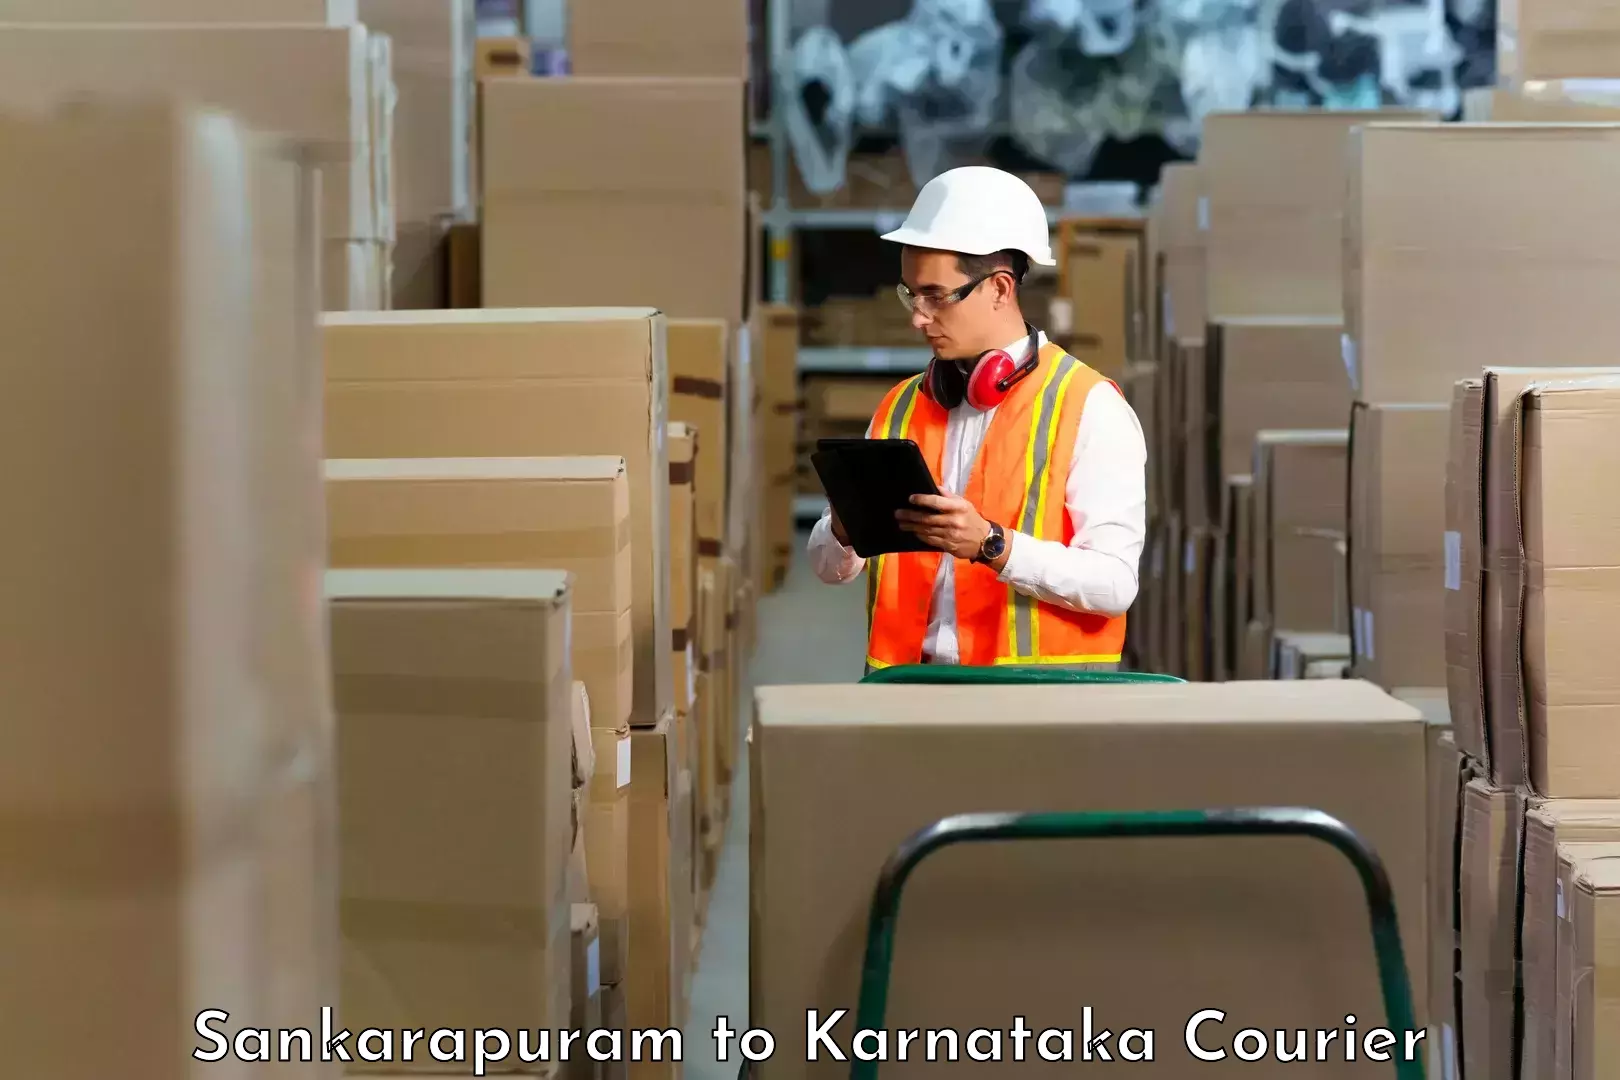 Digital courier platforms Sankarapuram to Gurmatkal